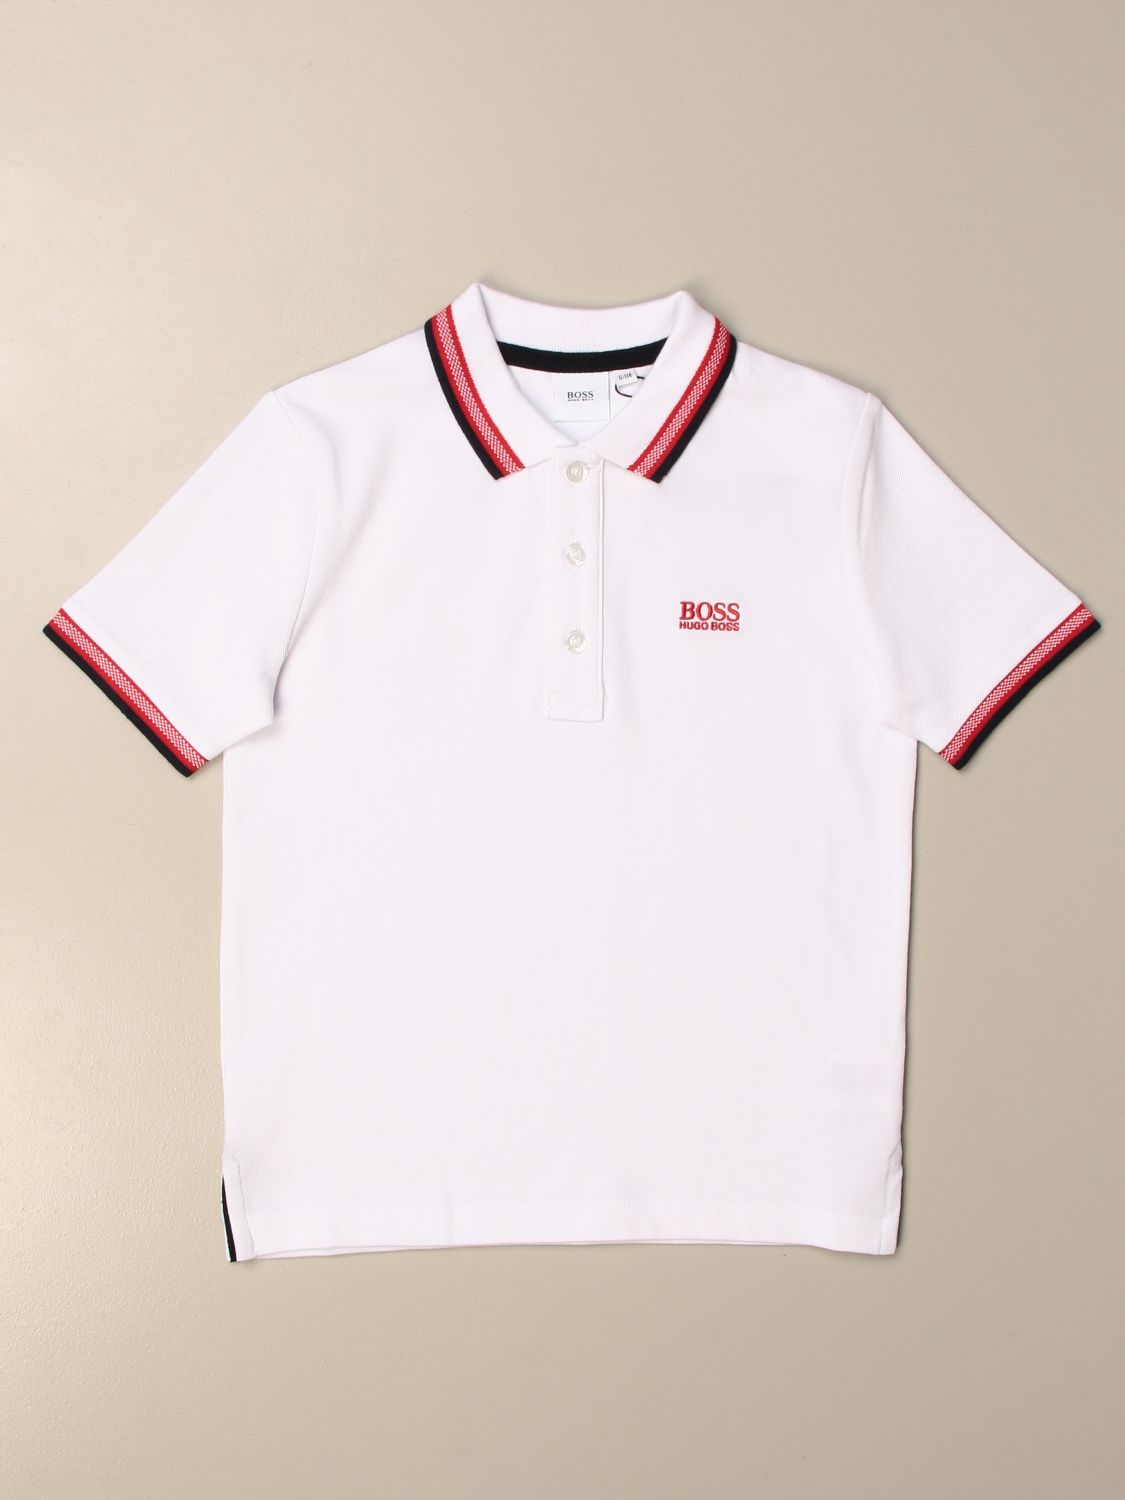 Boss Outlet: Polo shirt kids | Polo Hugo Kids White | Polo Hugo Boss J25L13 GIGLIO.COM